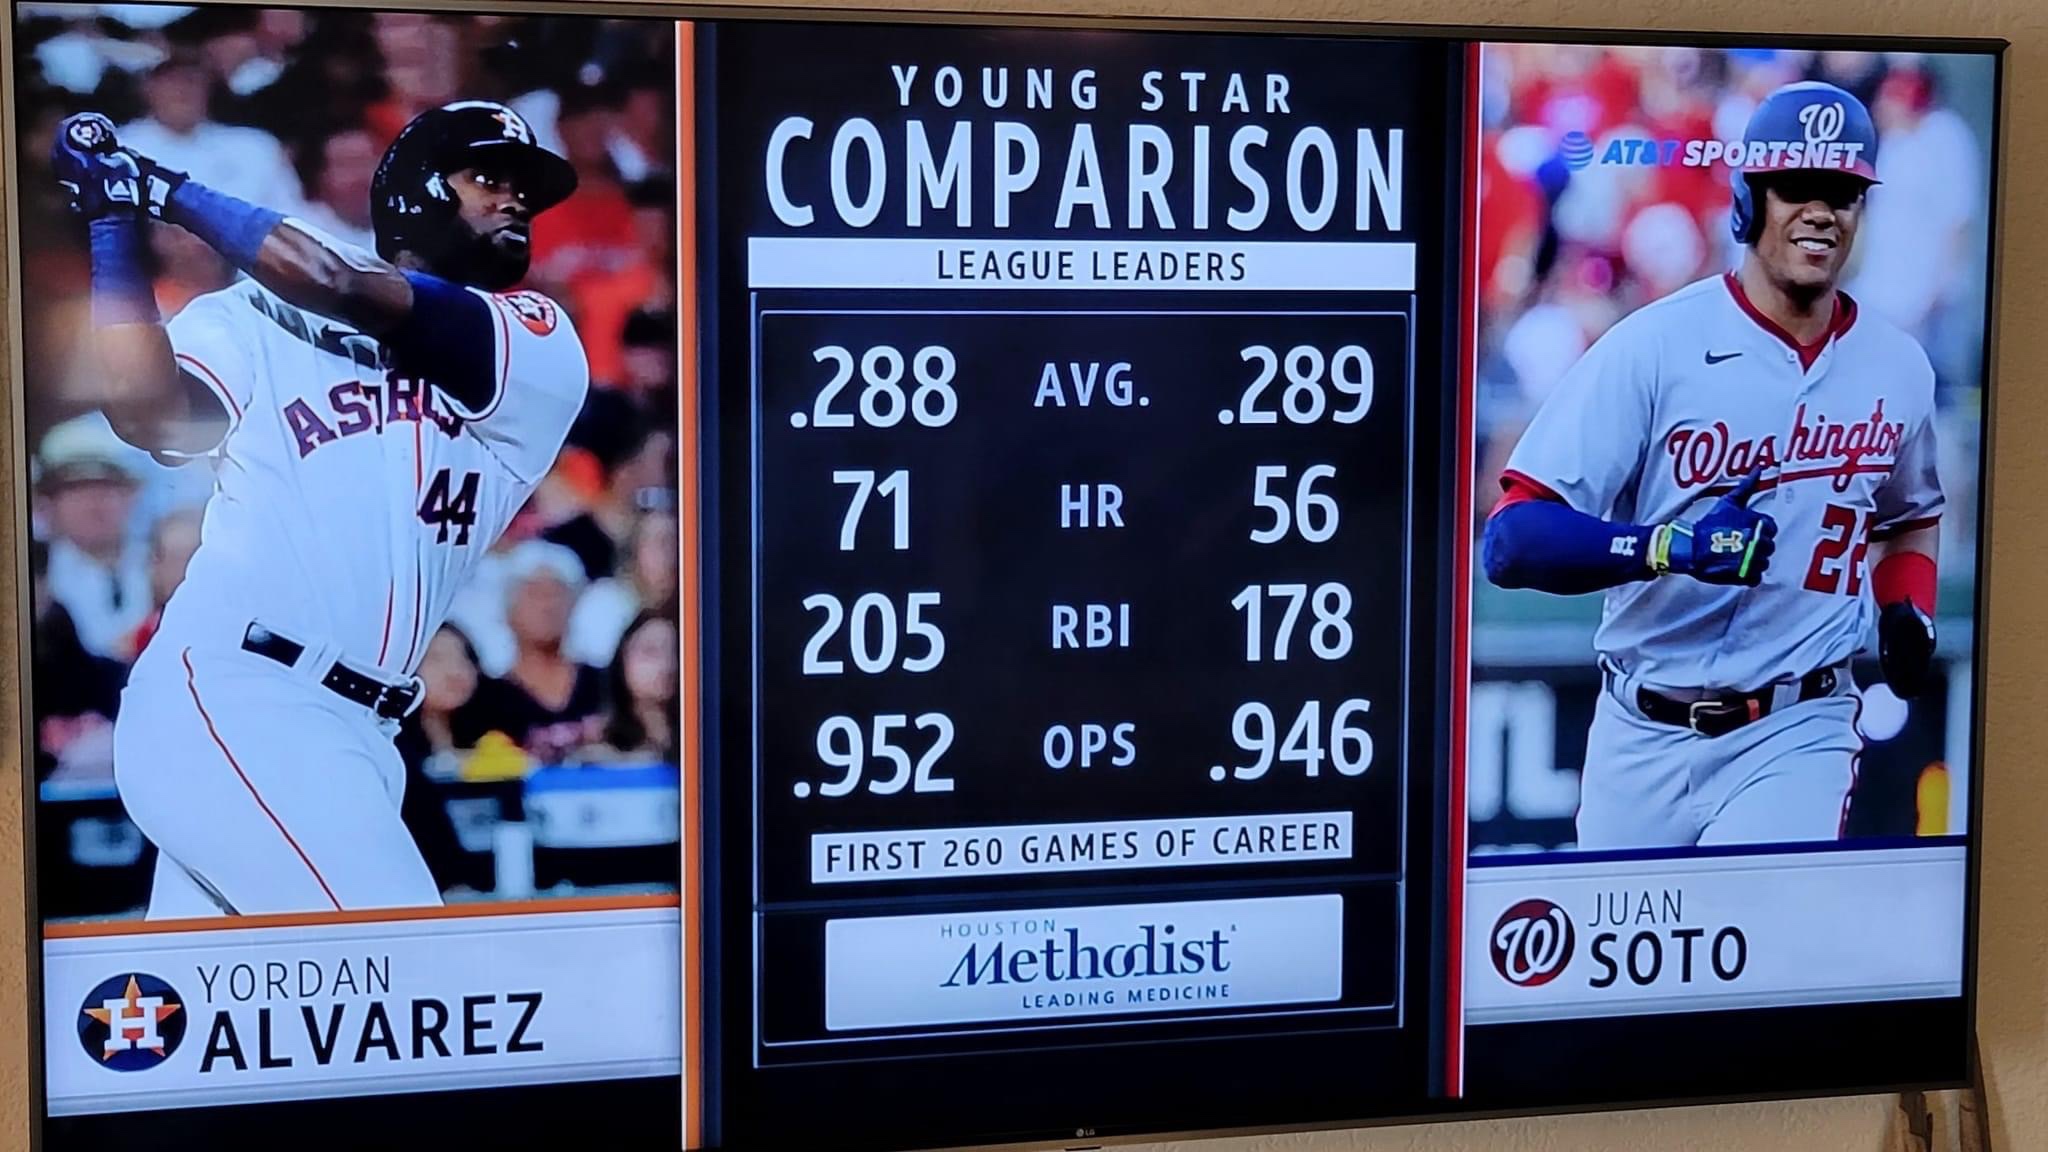 David Ortiz/Yordan Alvarez comparison posted by MLB Network on Twitter :  r/Astros